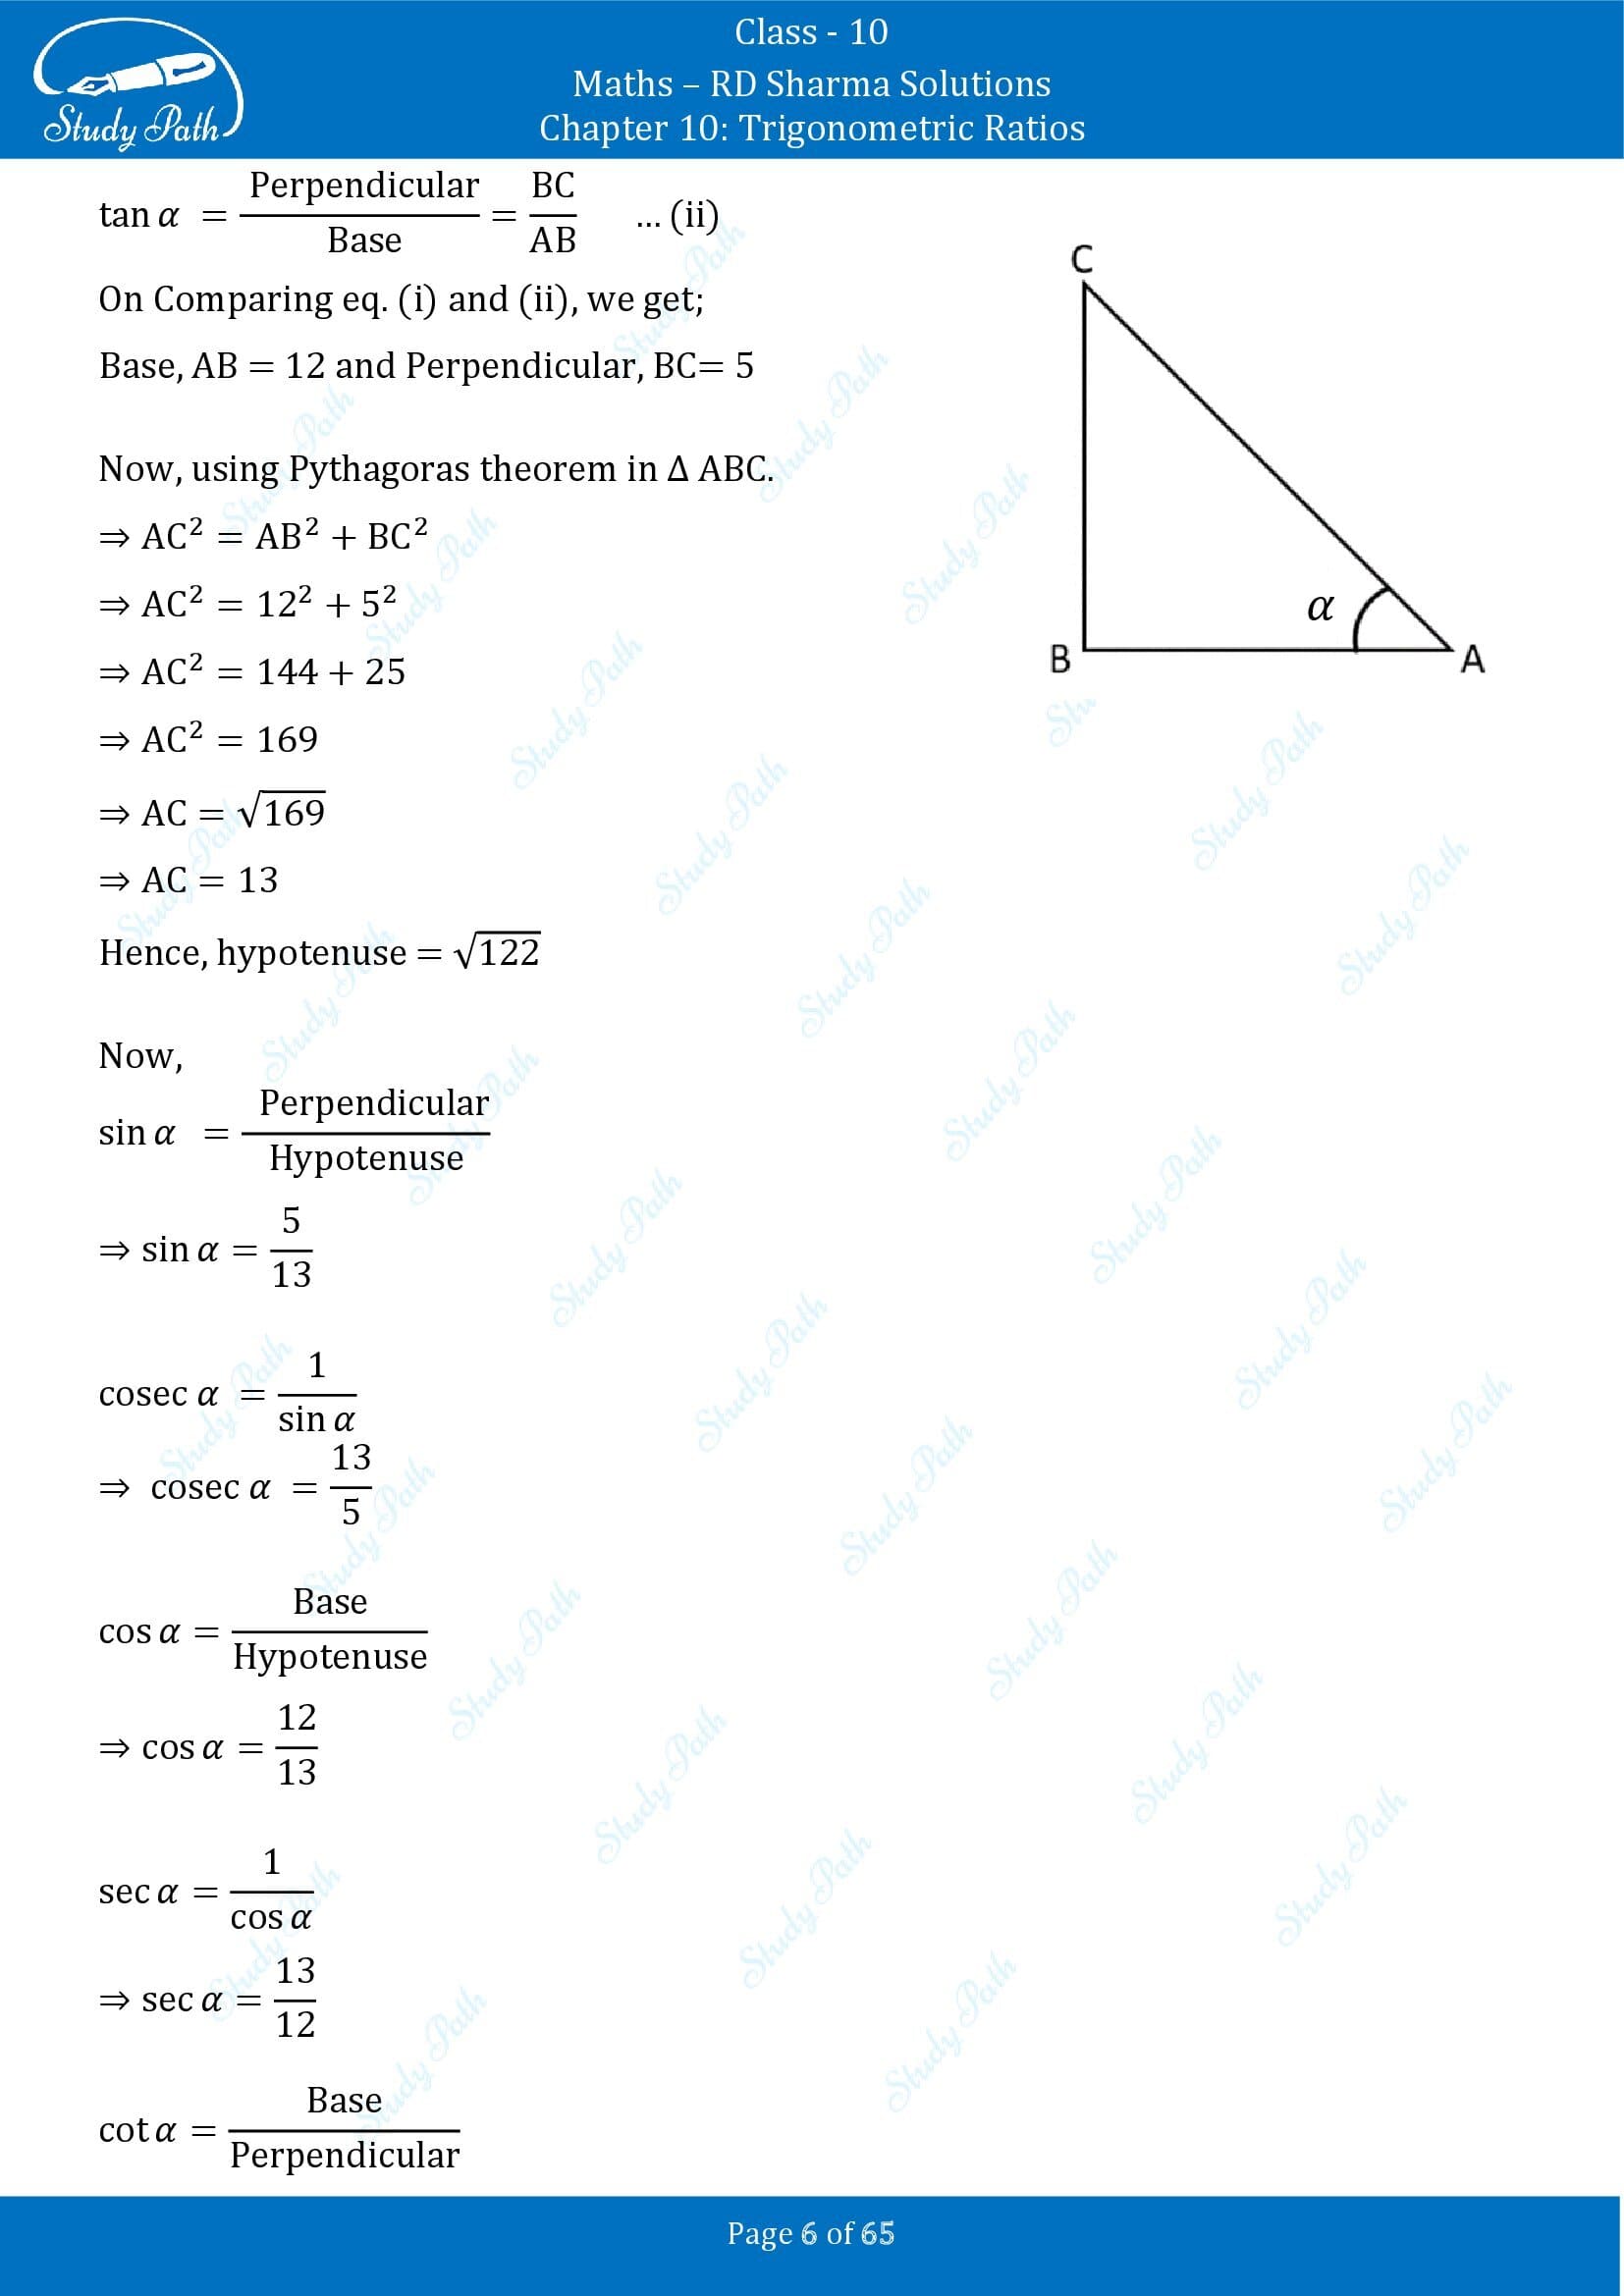 RD Sharma Solutions Class 10 Chapter 10 Trigonometric Ratios Exercise 10.1 00006